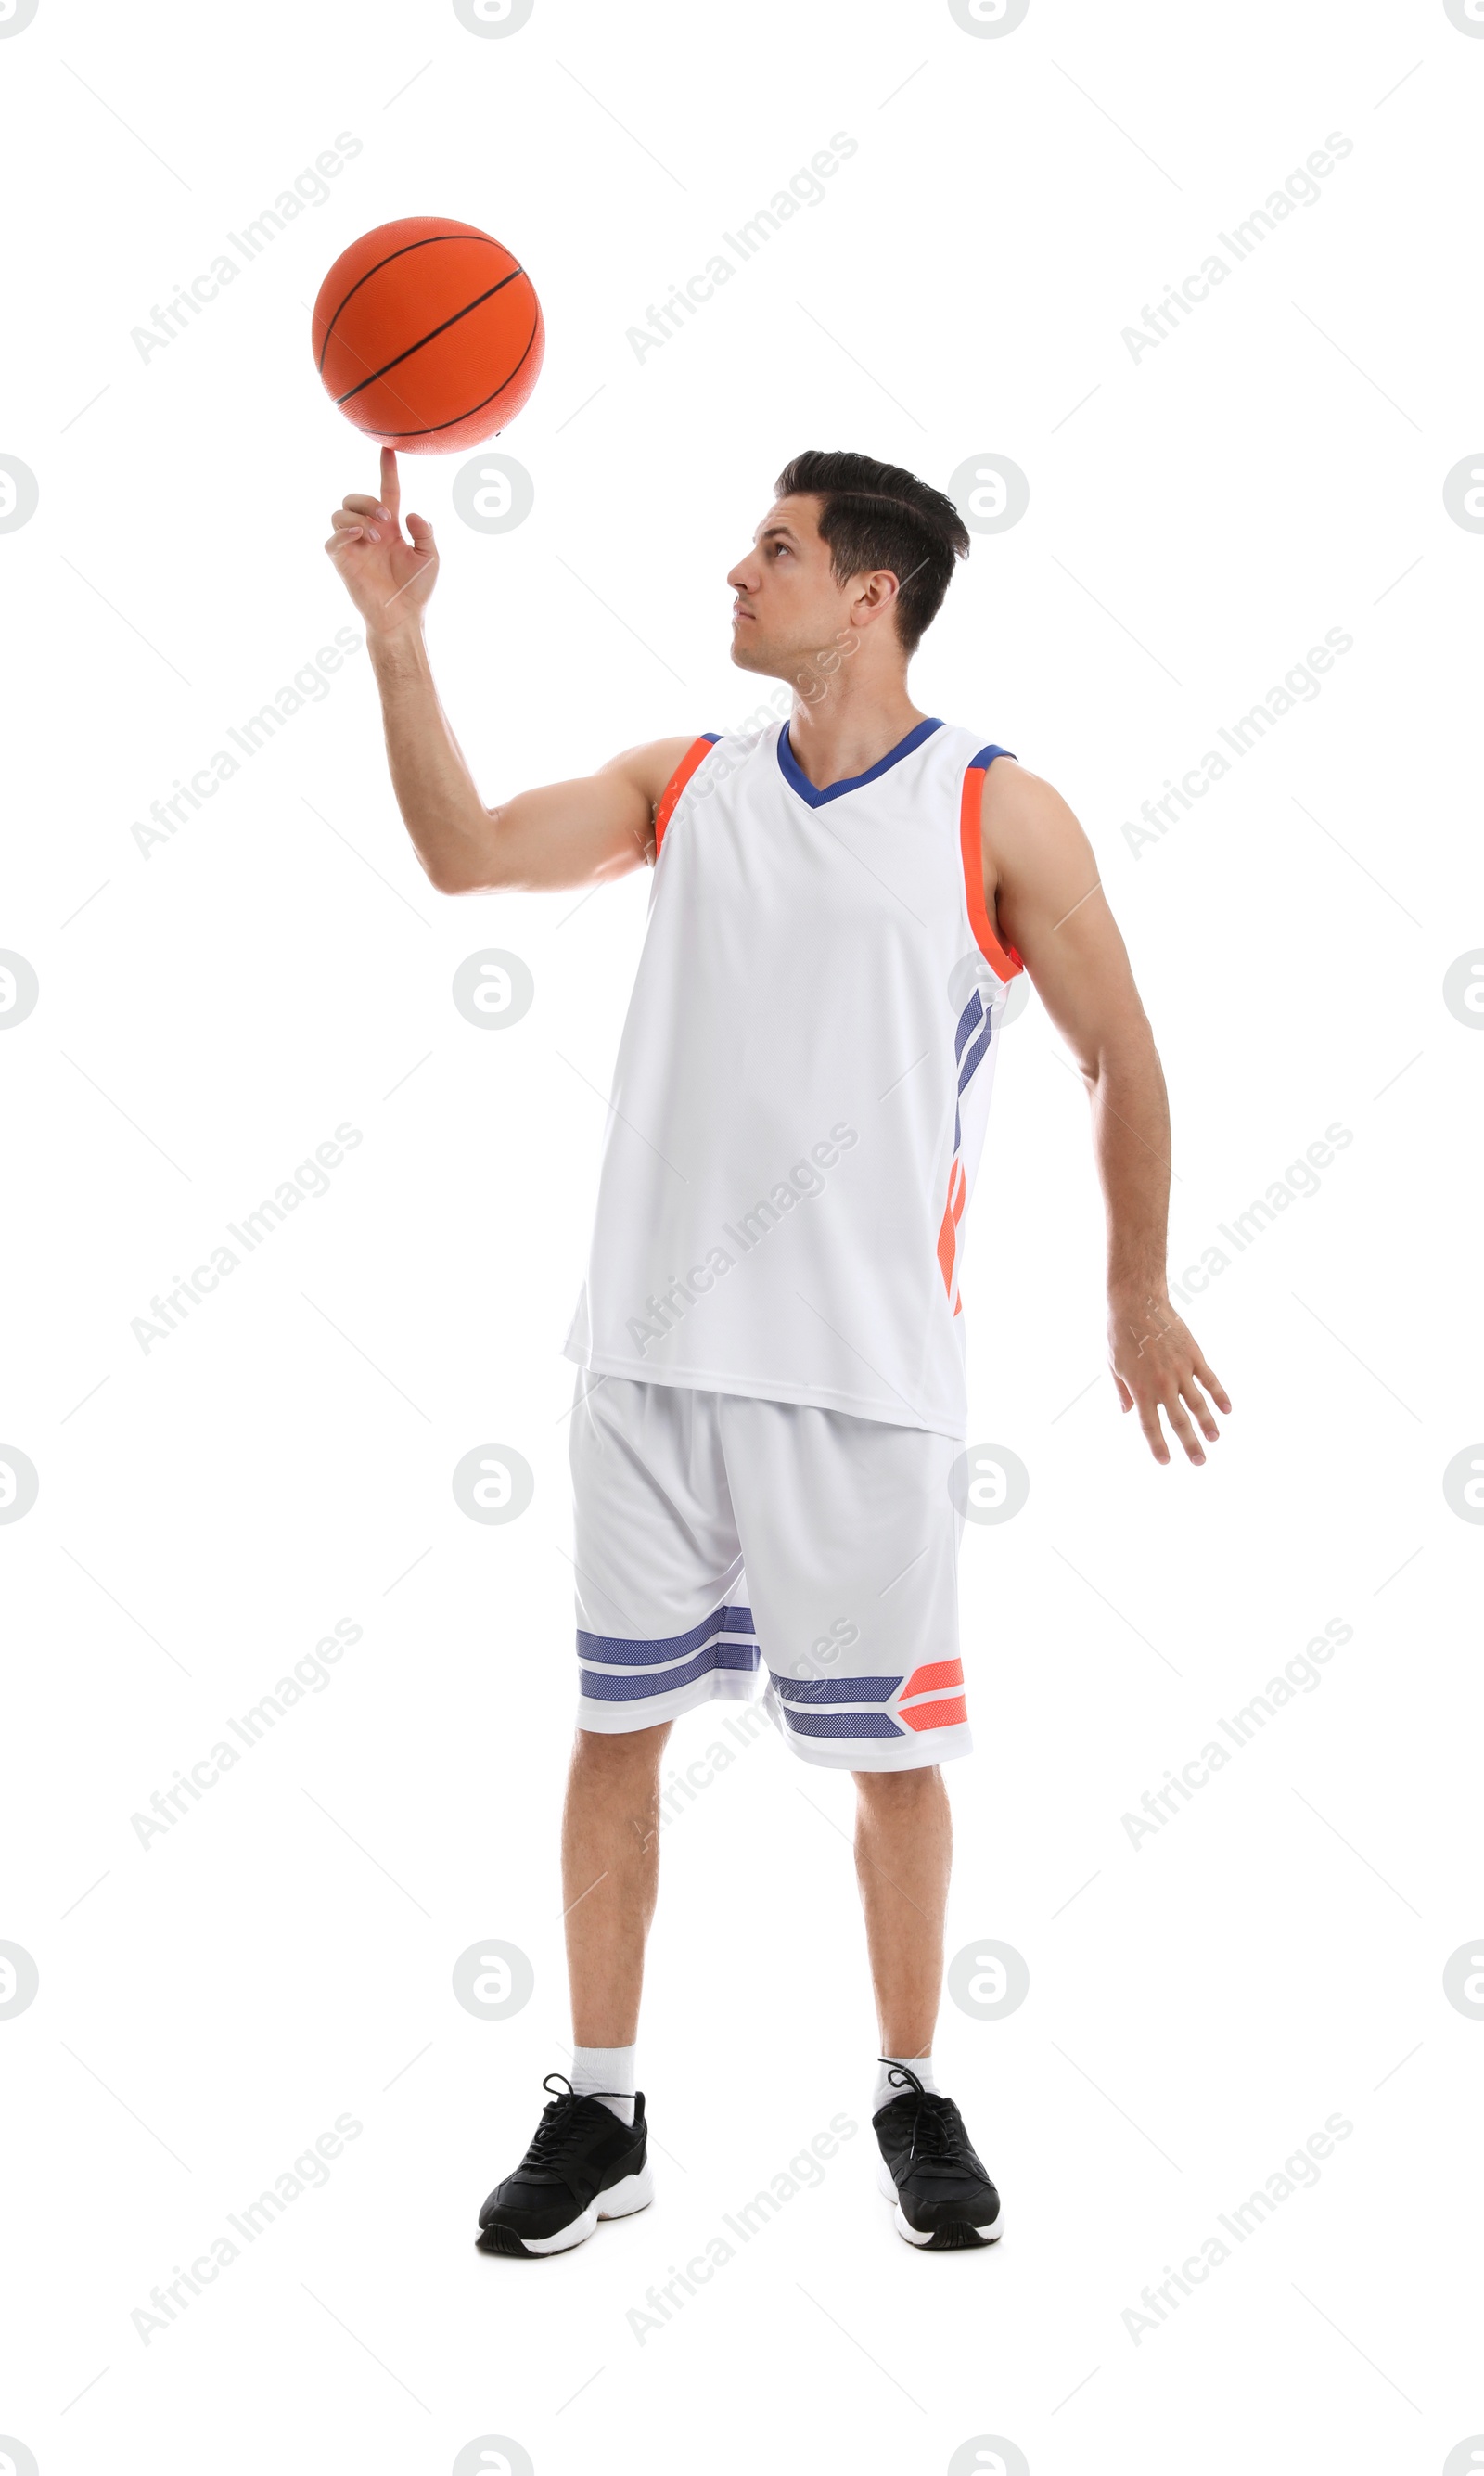 Photo of Basketball player spinning ball on finger against white background